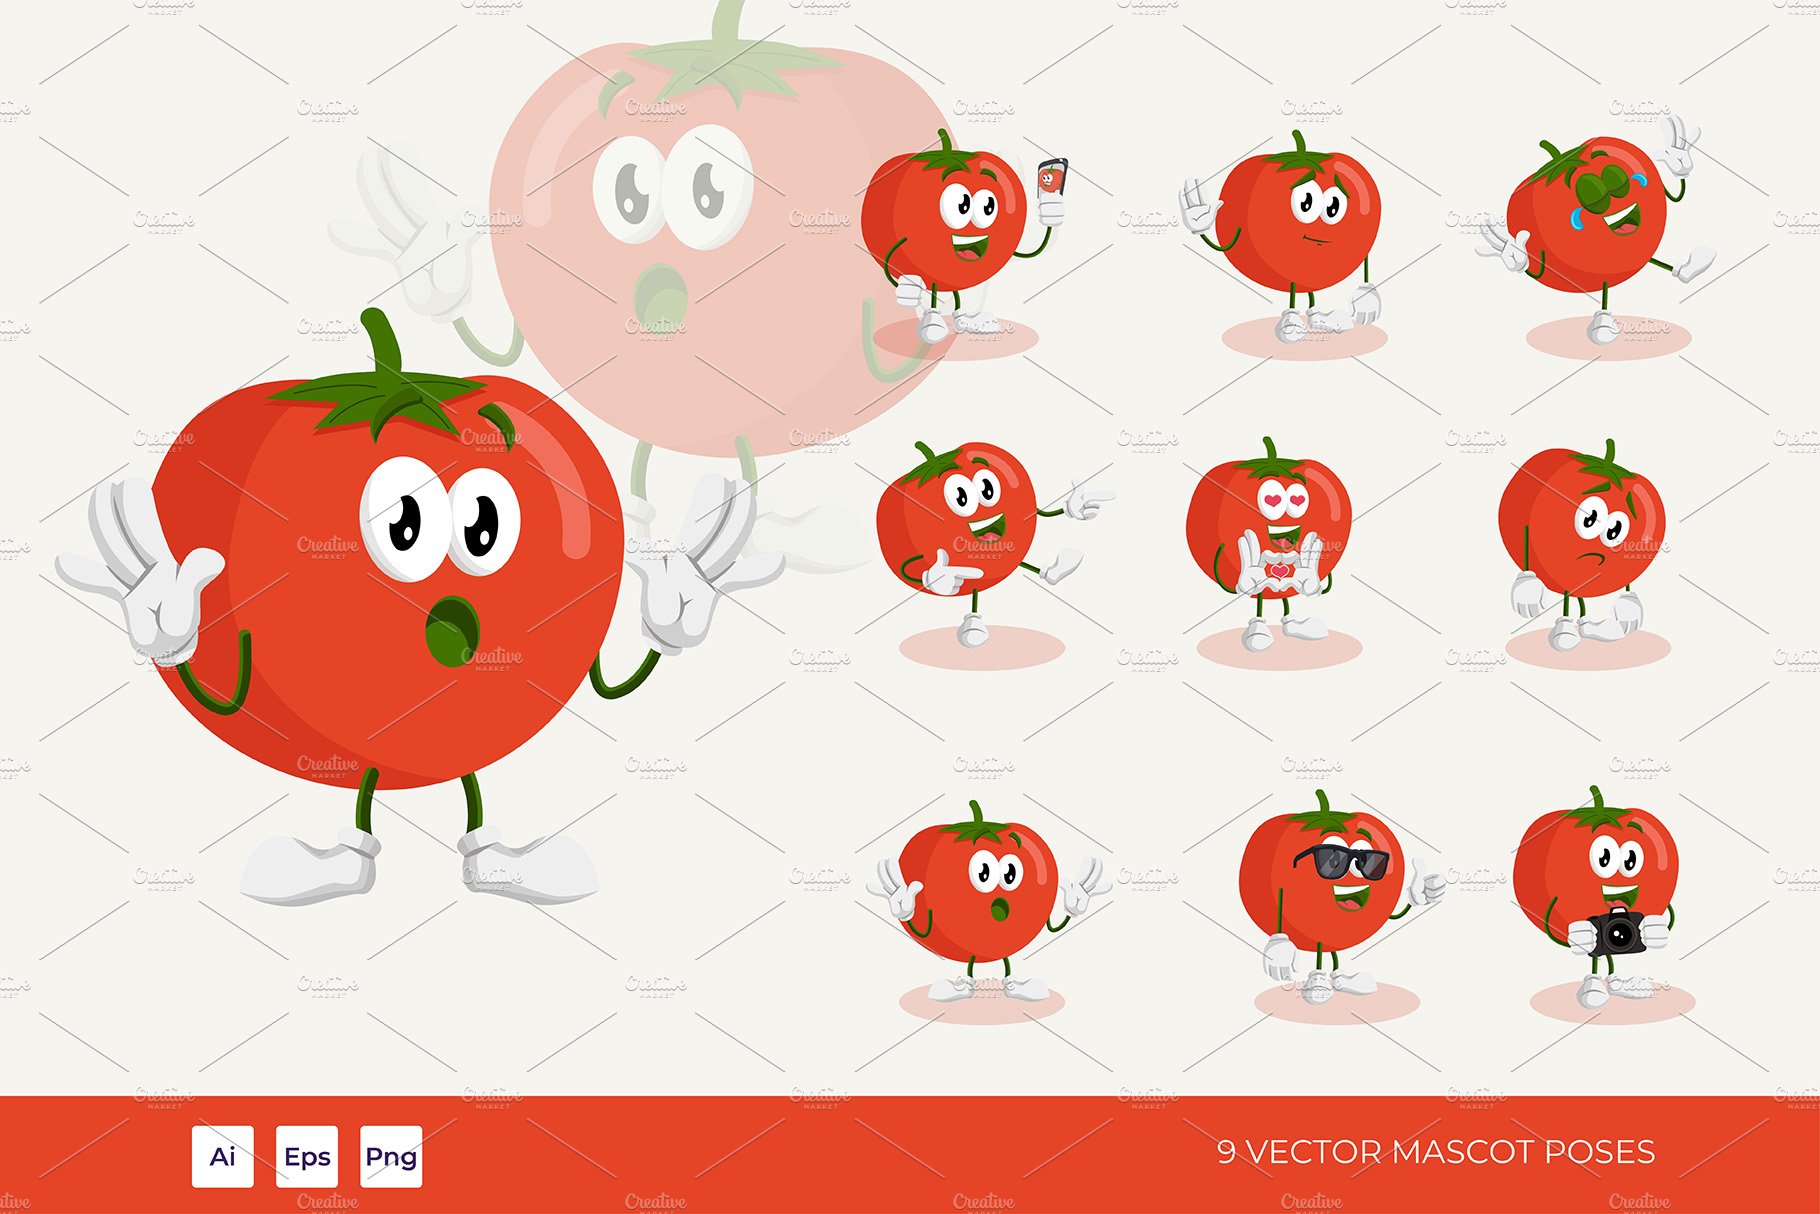 Tomato Logo Mascot cover image.